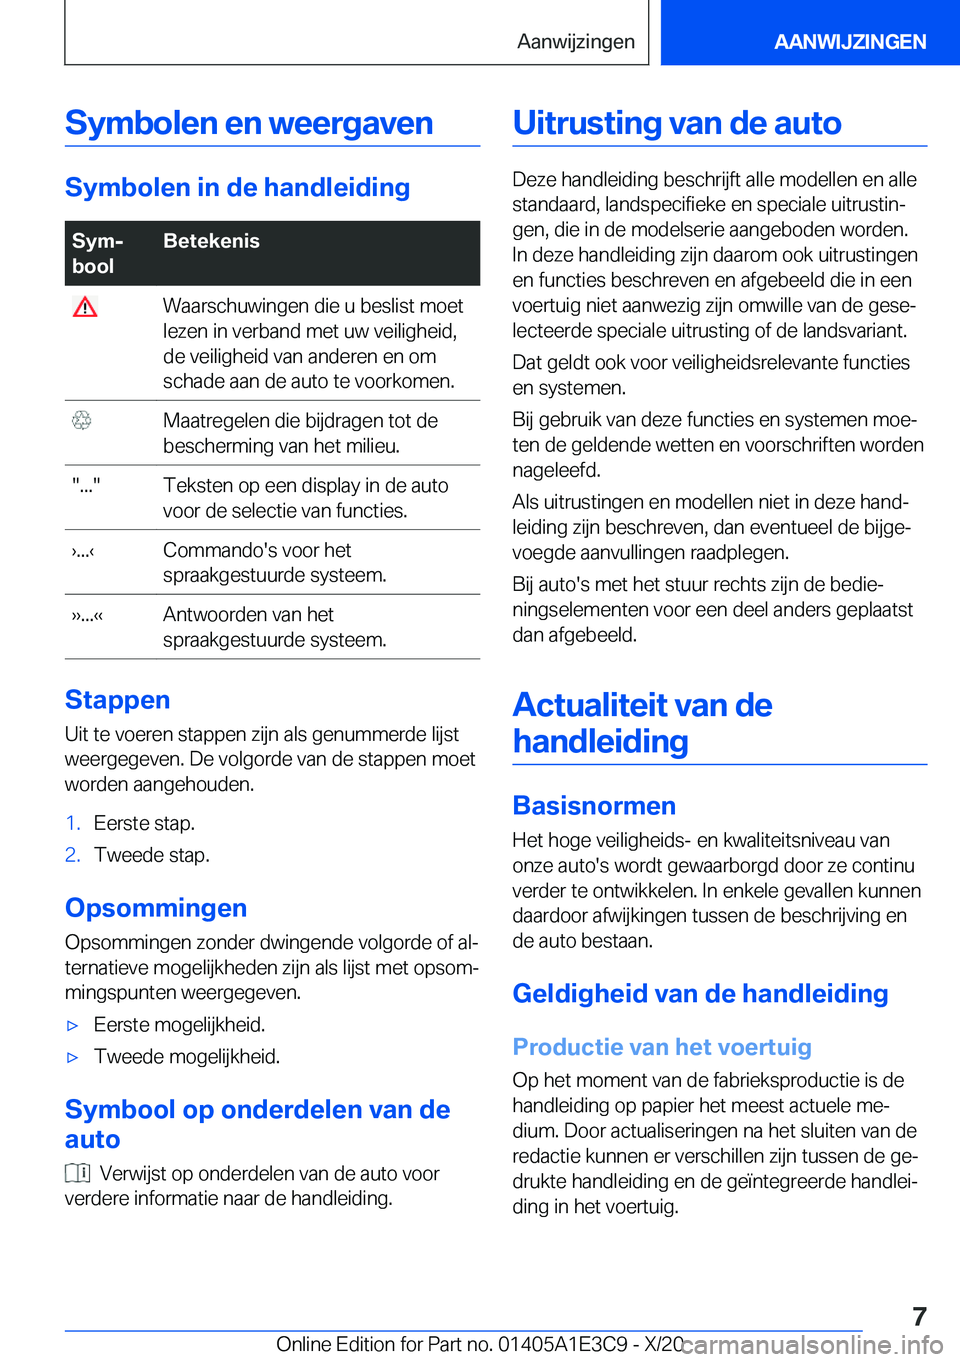 BMW M4 2021  Instructieboekjes (in Dutch) �S�y�m�b�o�l�e�n��e�n��w�e�e�r�g�a�v�e�n
�S�y�m�b�o�l�e�n��i�n��d�e��h�a�n�d�l�e�i�d�i�n�g
�S�y�mj
�b�o�o�l�B�e�t�e�k�e�n�i�s��W�a�a�r�s�c�h�u�w�i�n�g�e�n��d�i�e��u��b�e�s�l�i�s�t��m�o�e�t
